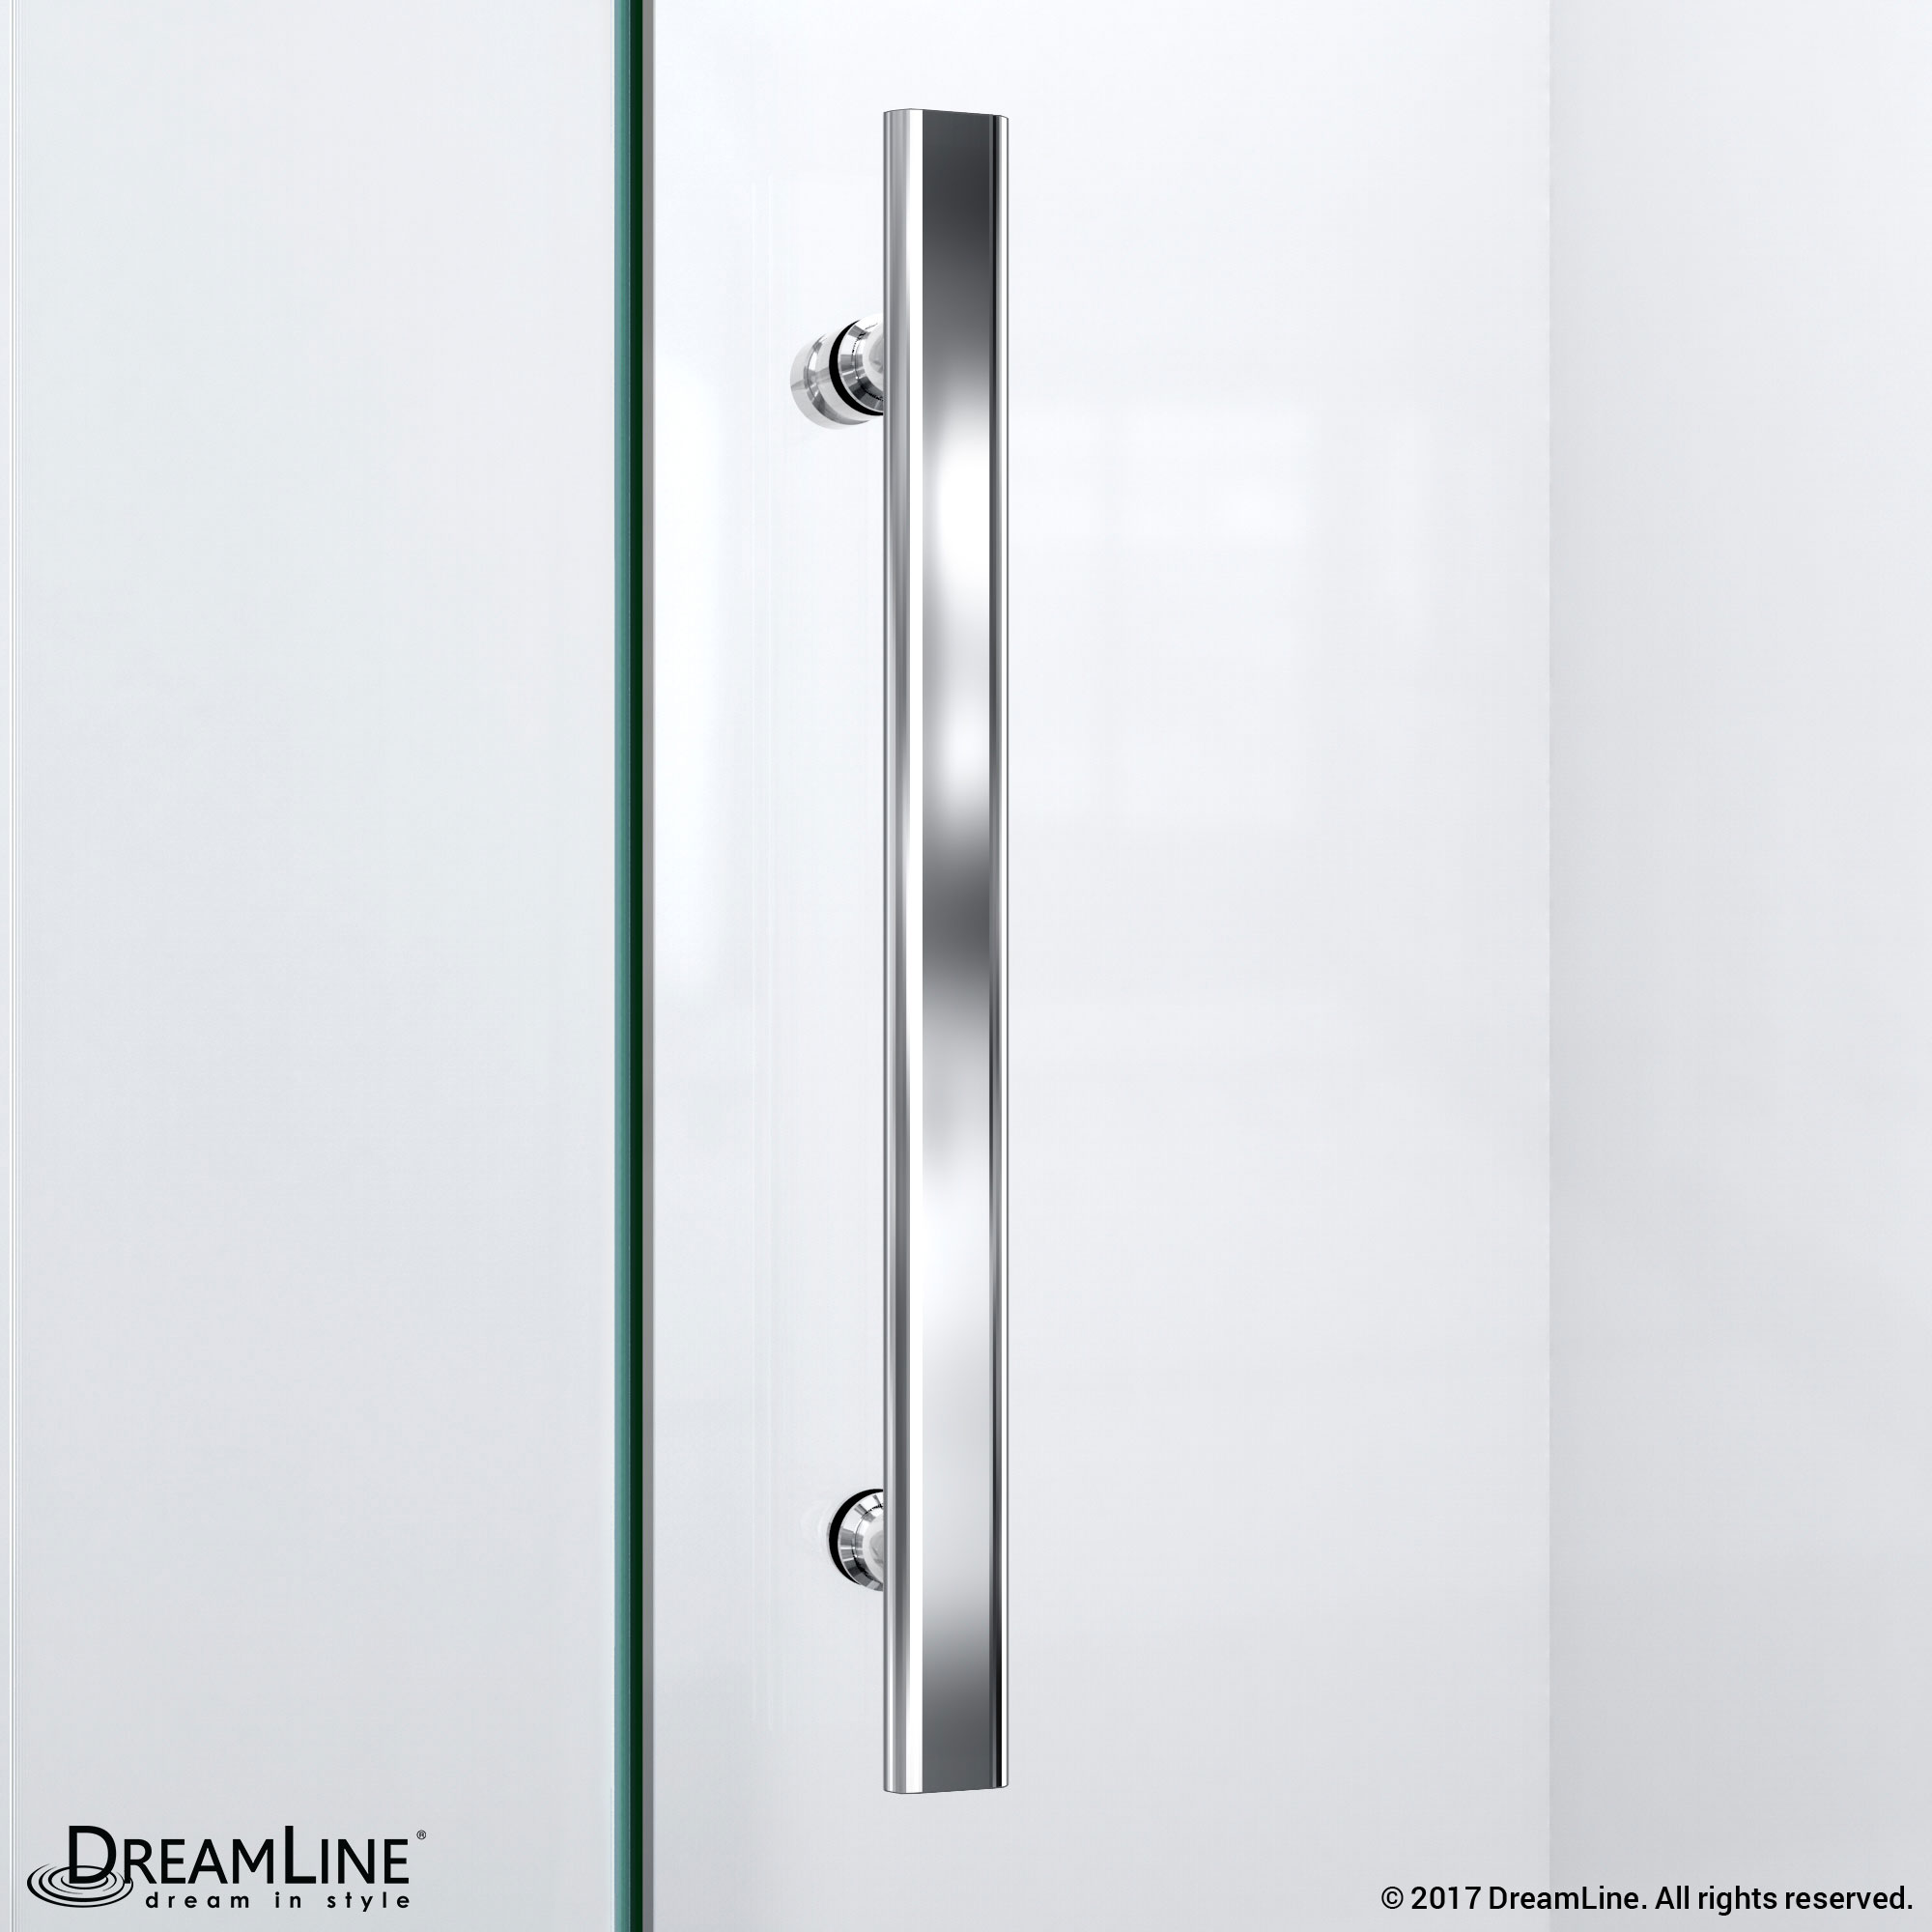 PrismLux 36-5/16" x 36-5/16" Frameless Hinged Shower Enclosure, Clear 3/8" Glass Shower, Chrome